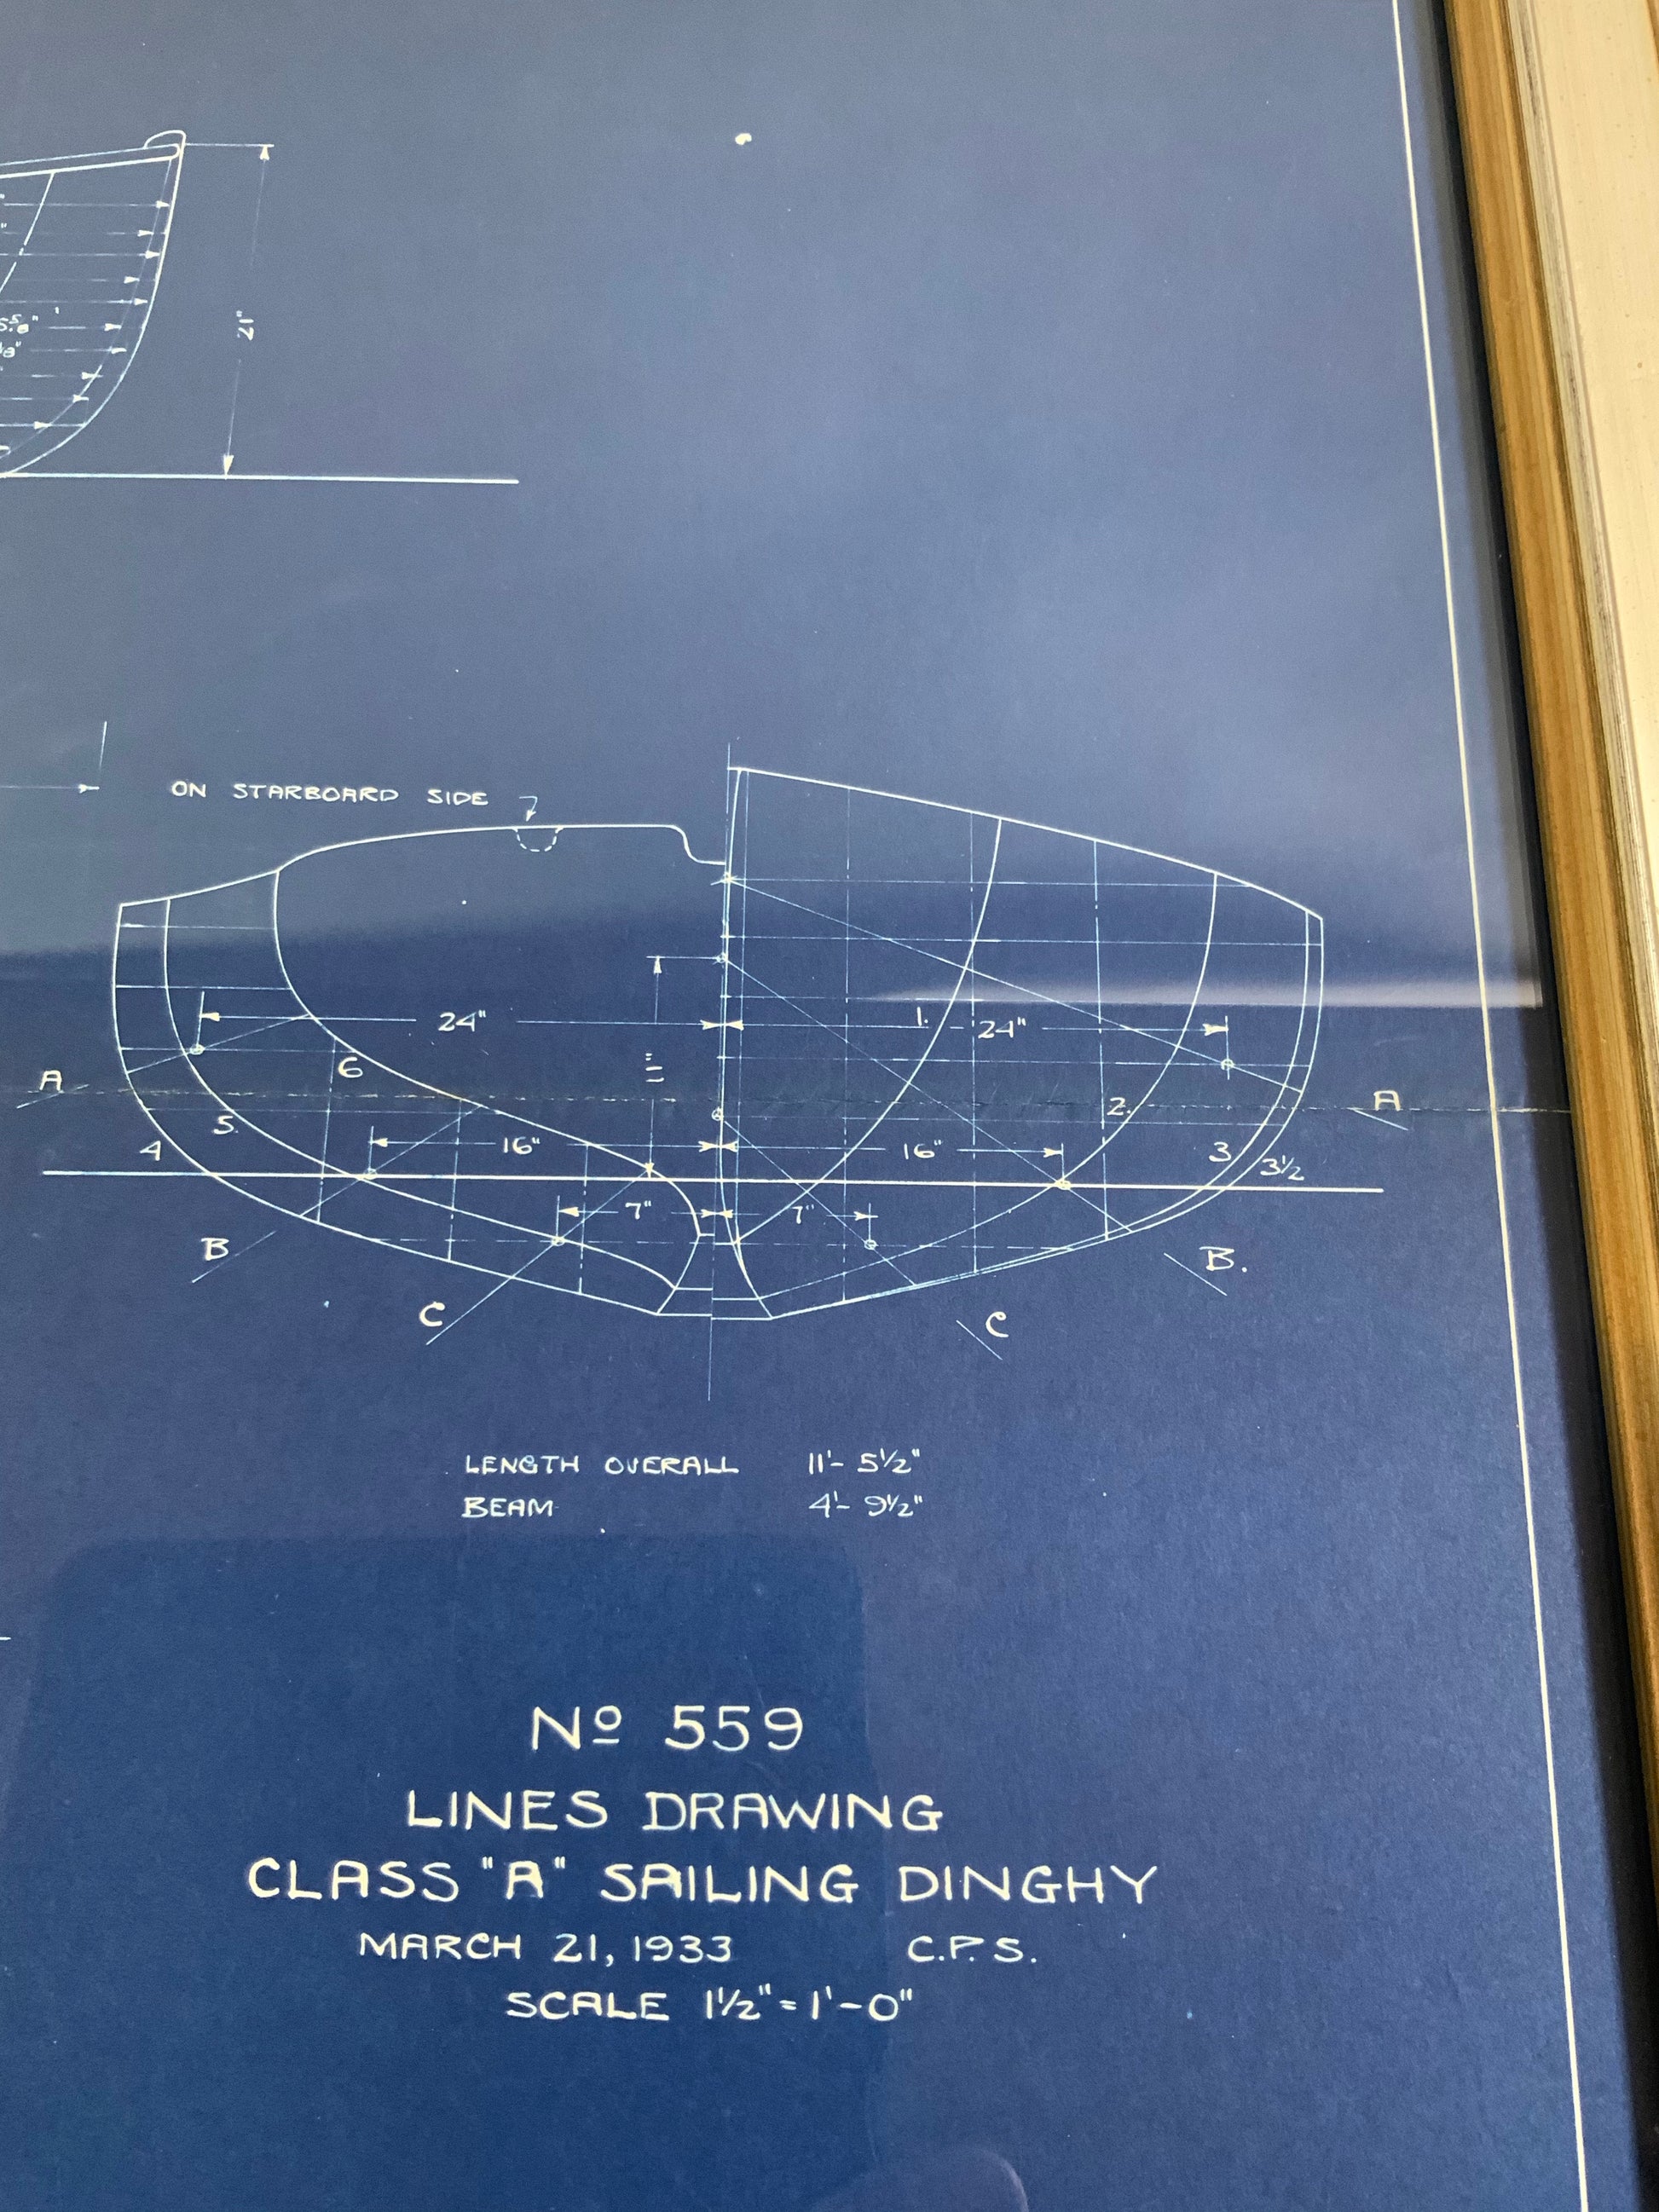 Original Blueprint for the Sailing Dingy “Burp” by John Alden - Lannan Gallery